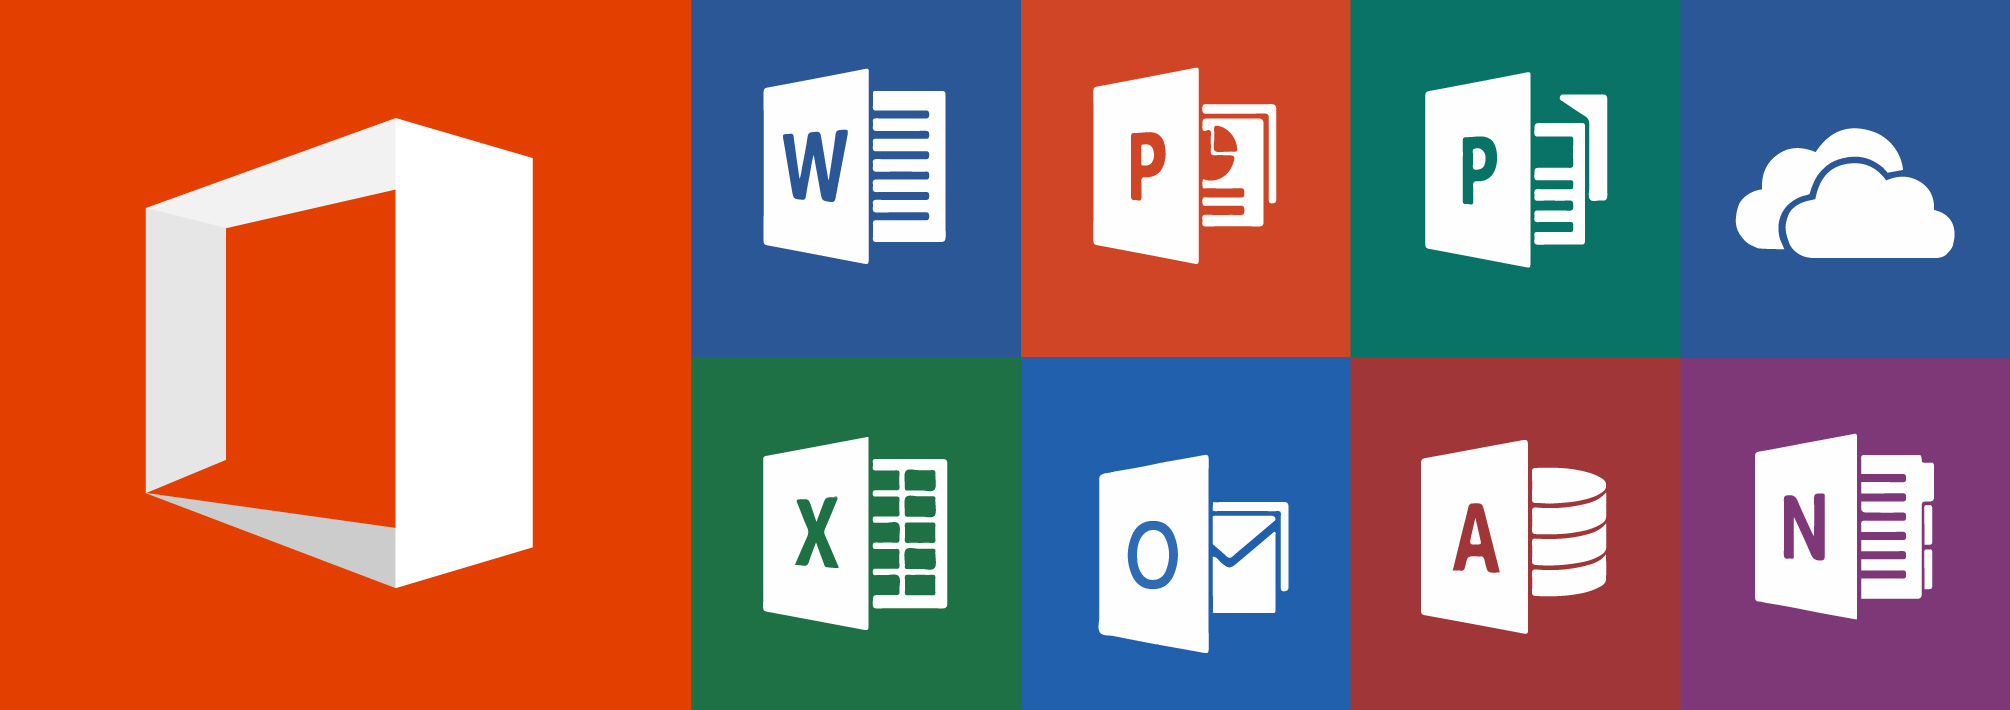 Microsoft Office training in Ikeja Lagos Nigeria